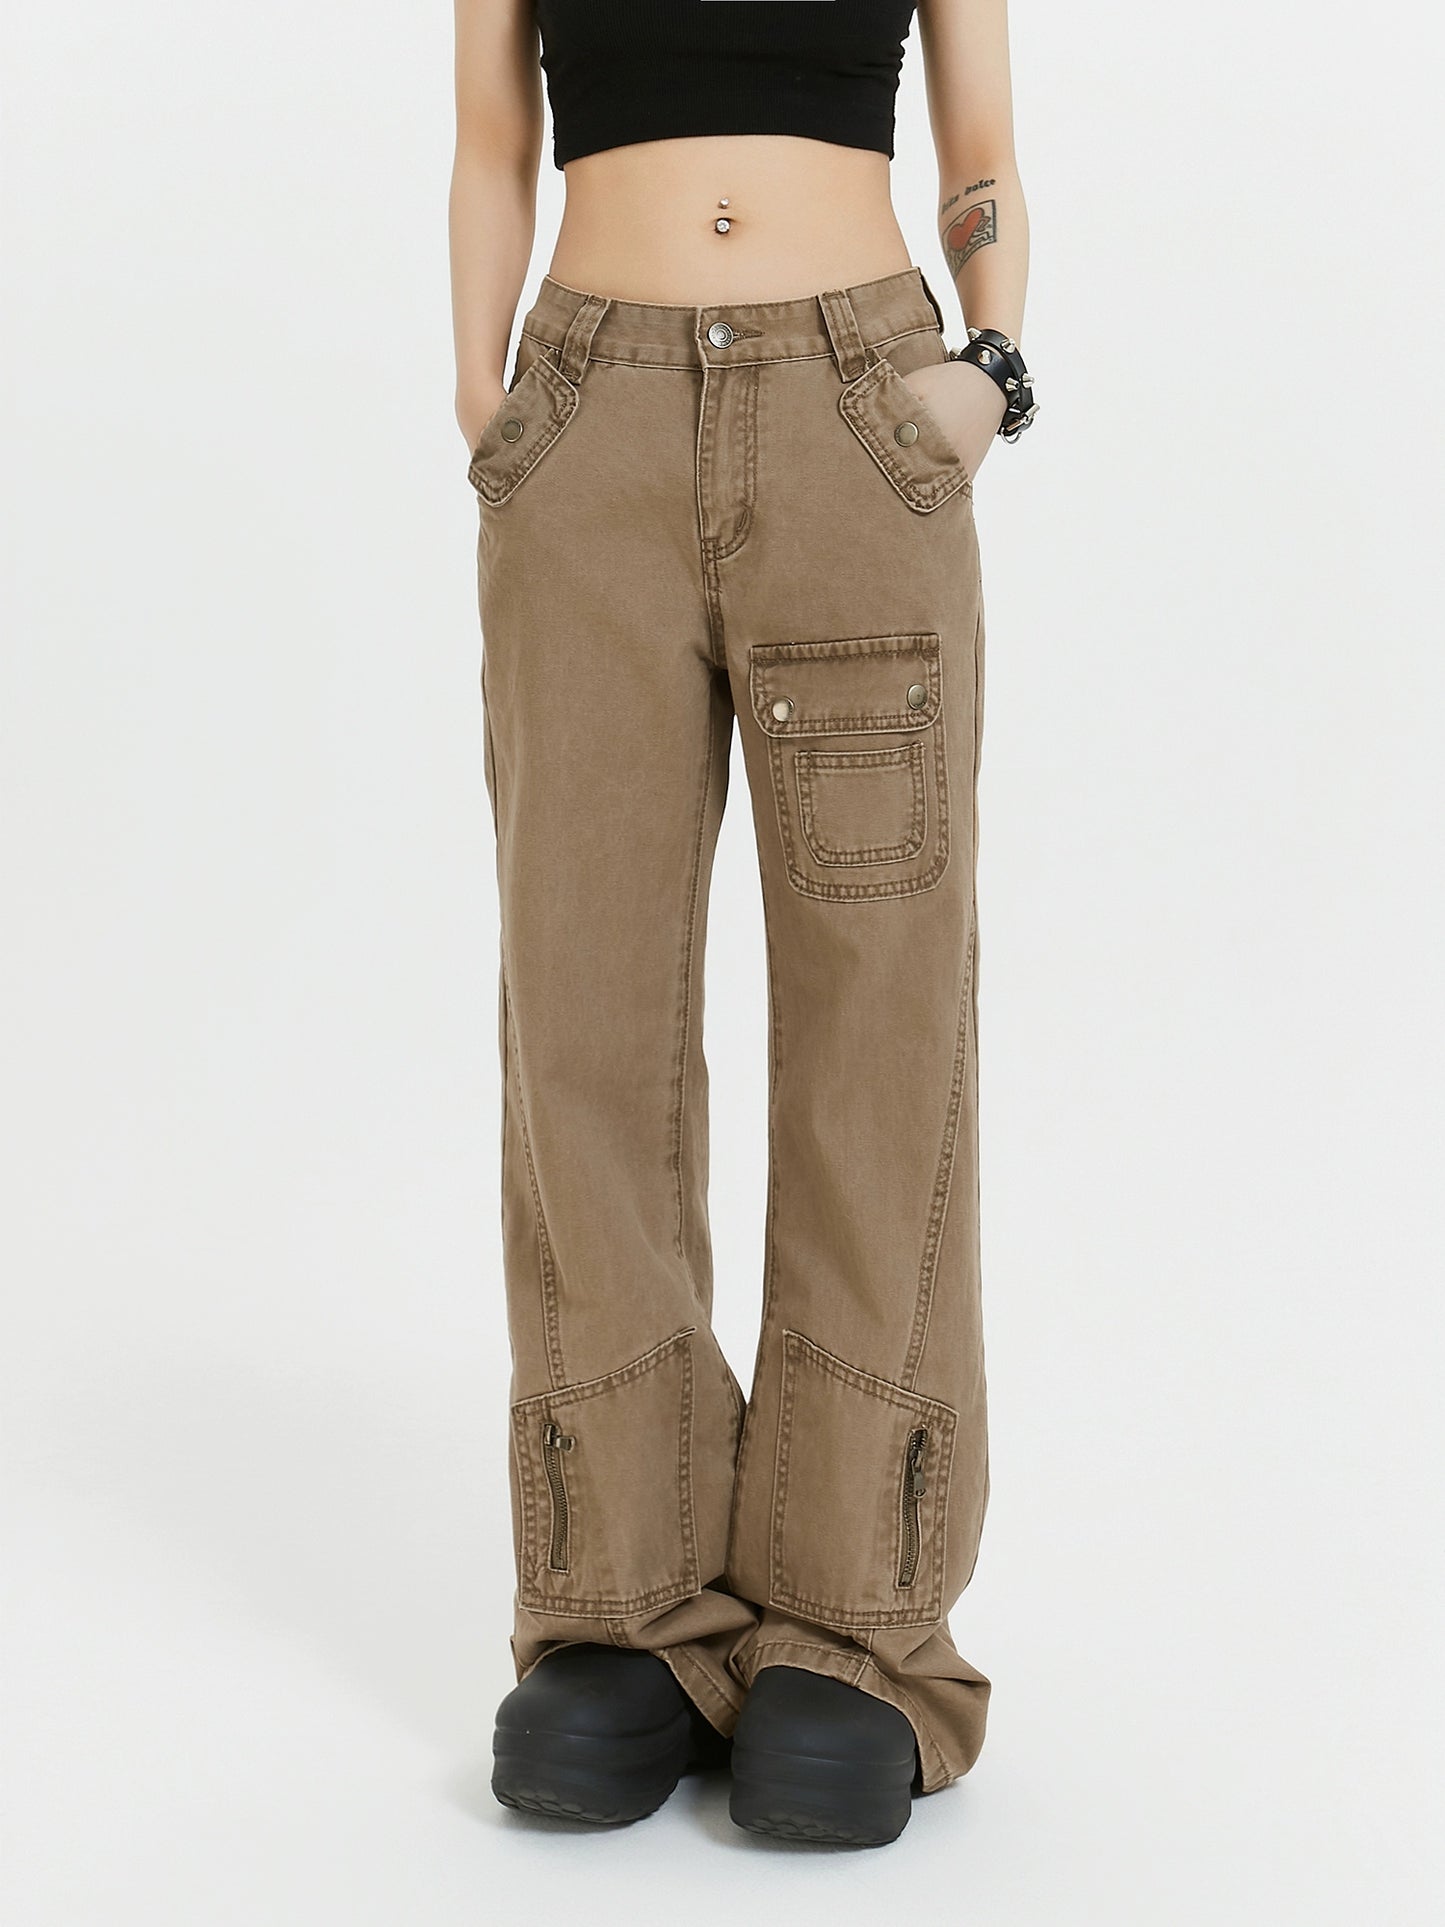 MICHINNYON retro design sense multi-pocket cargo pants street slim casual straight loose pants new